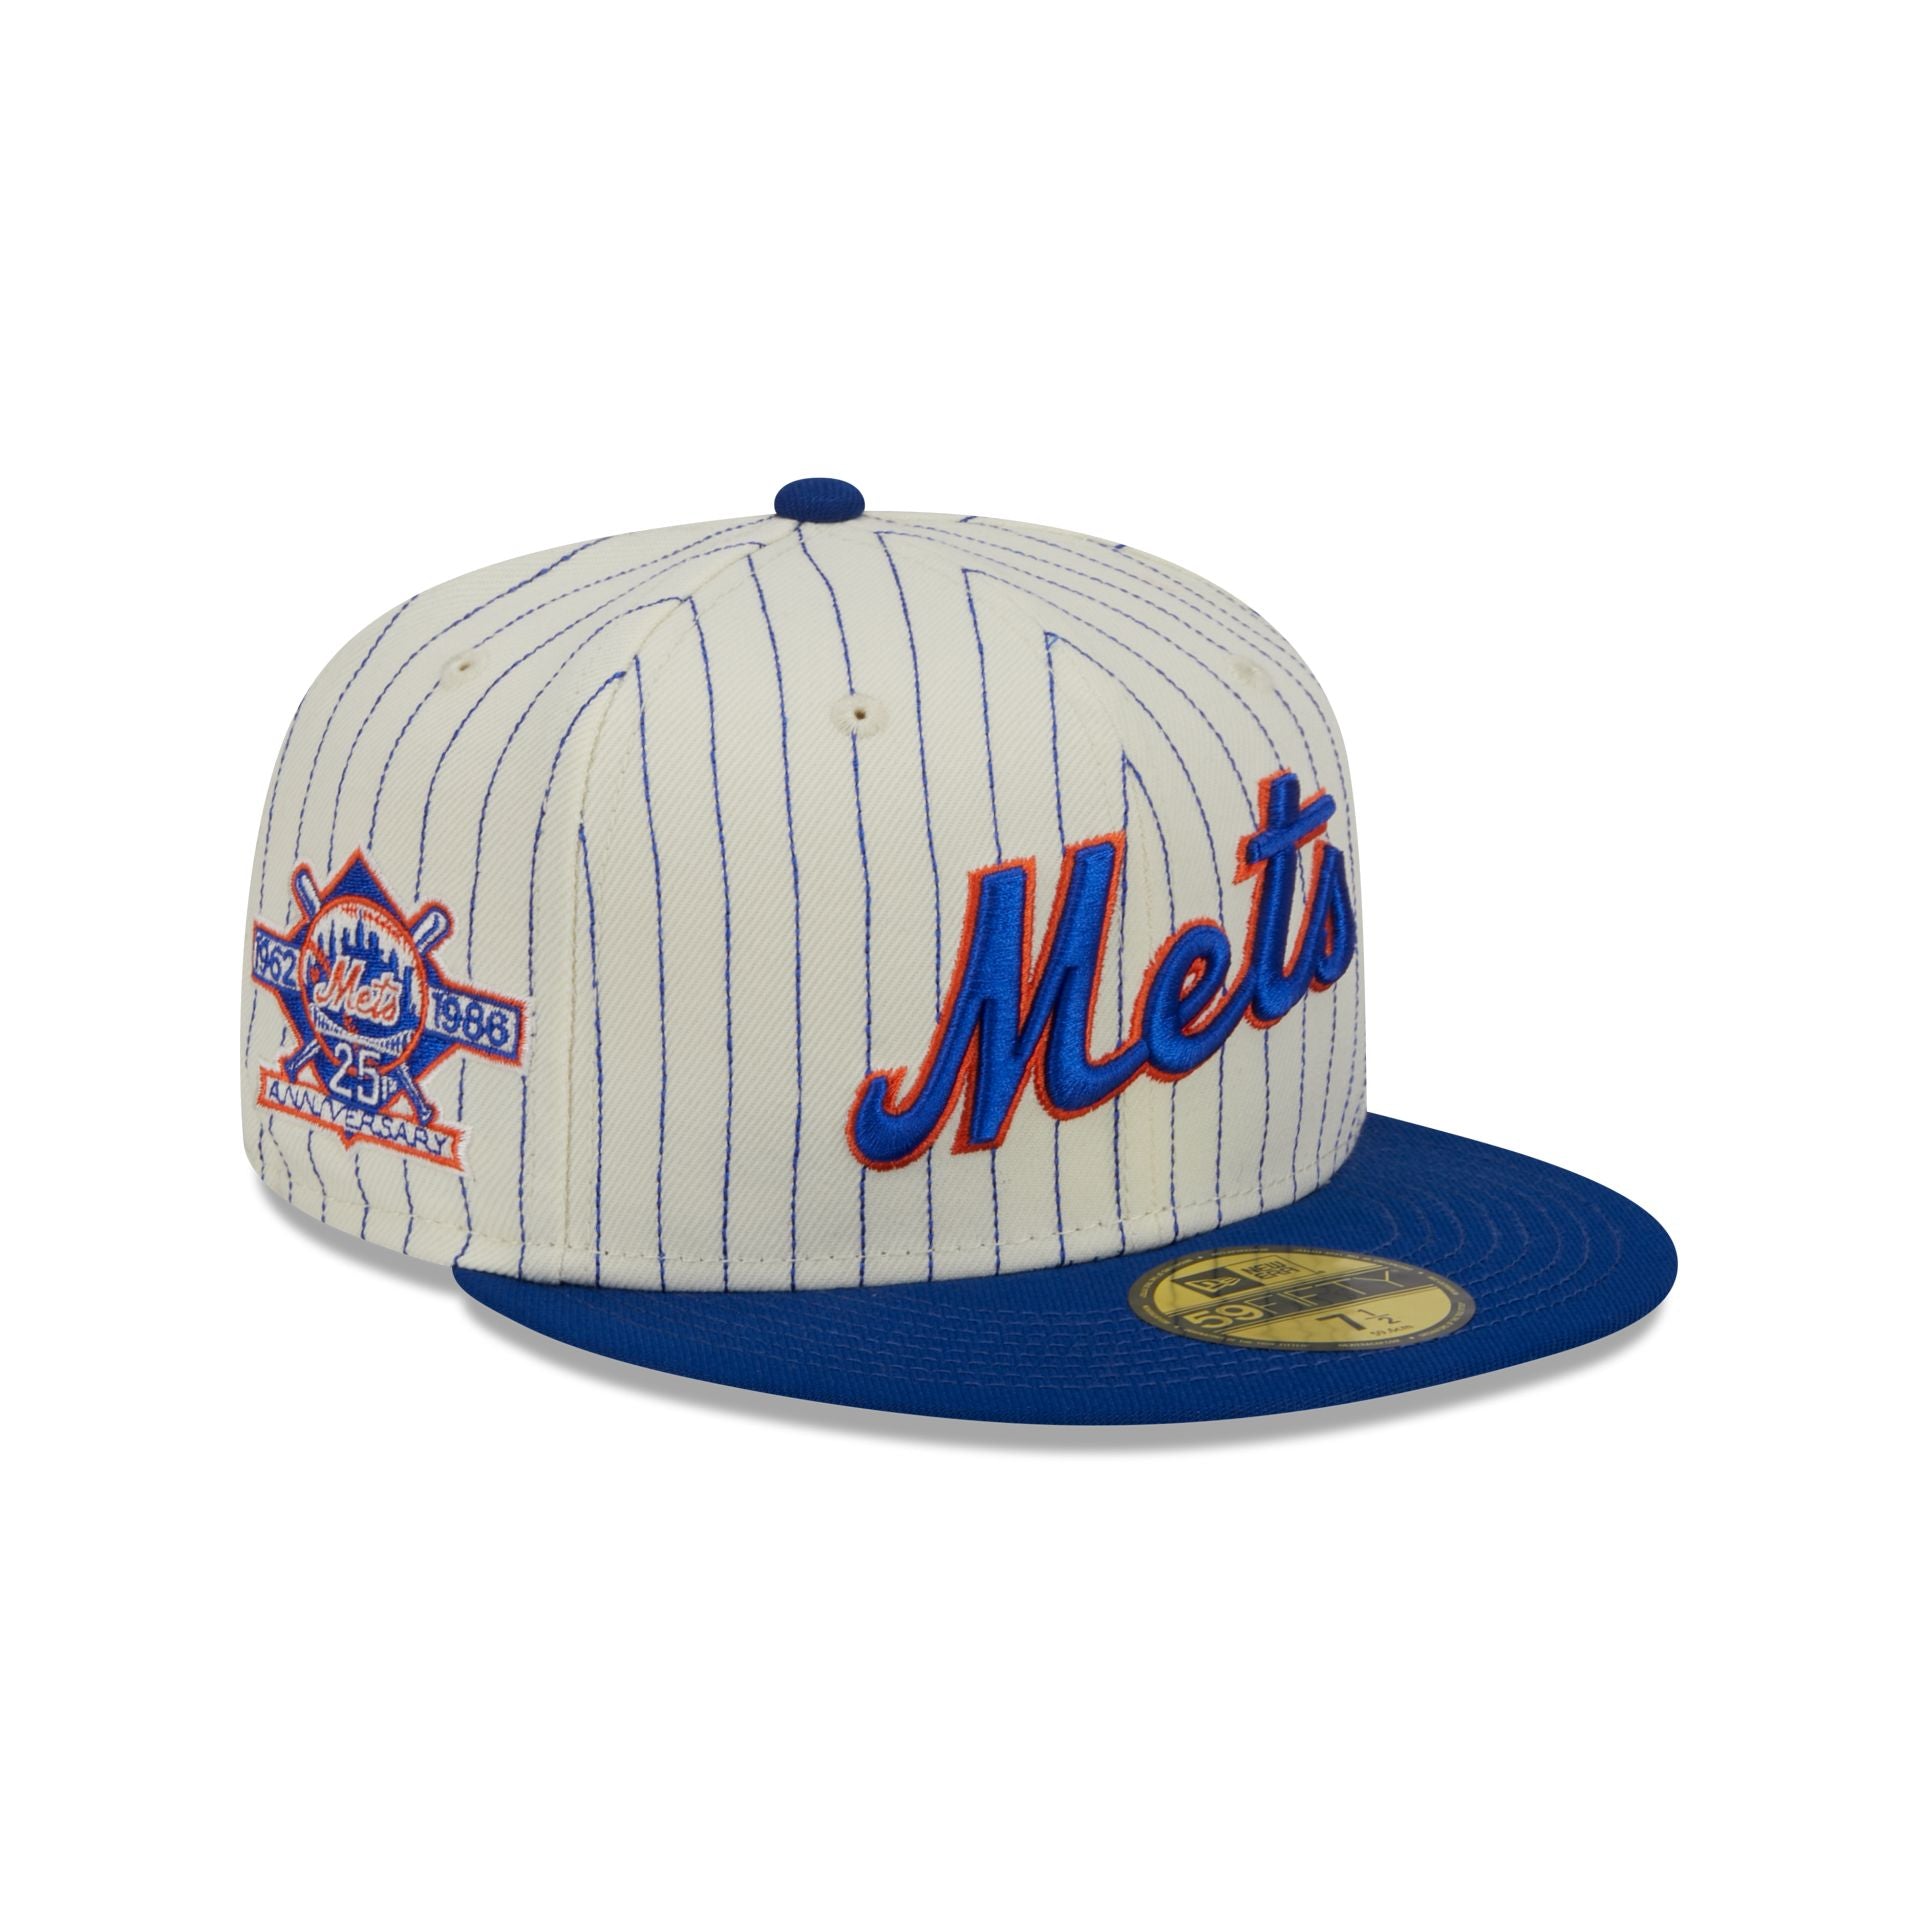 New York Mets Throwback Jerseys, Mets Retro & Vintage Throwback